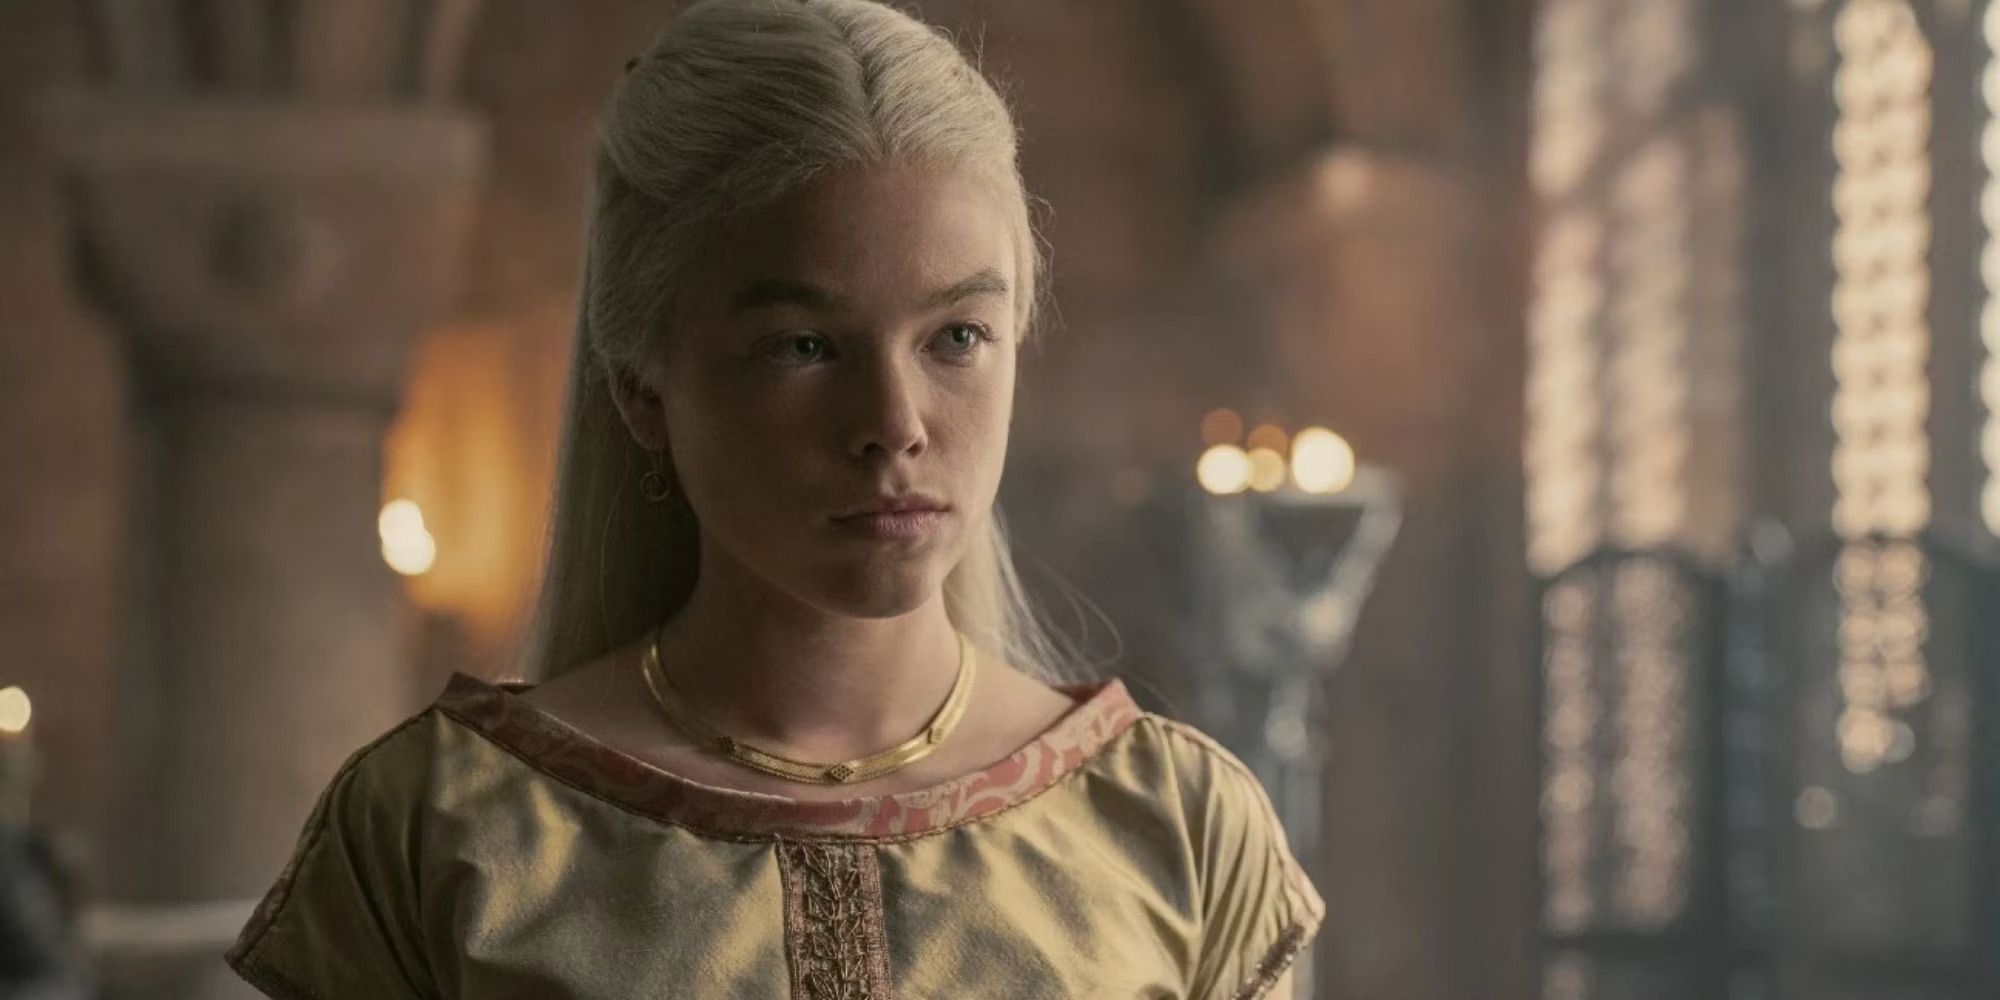 Millie Alcock as Princess Rhaenyra Targaryen close-up portrait from 'House of the Dragon' 